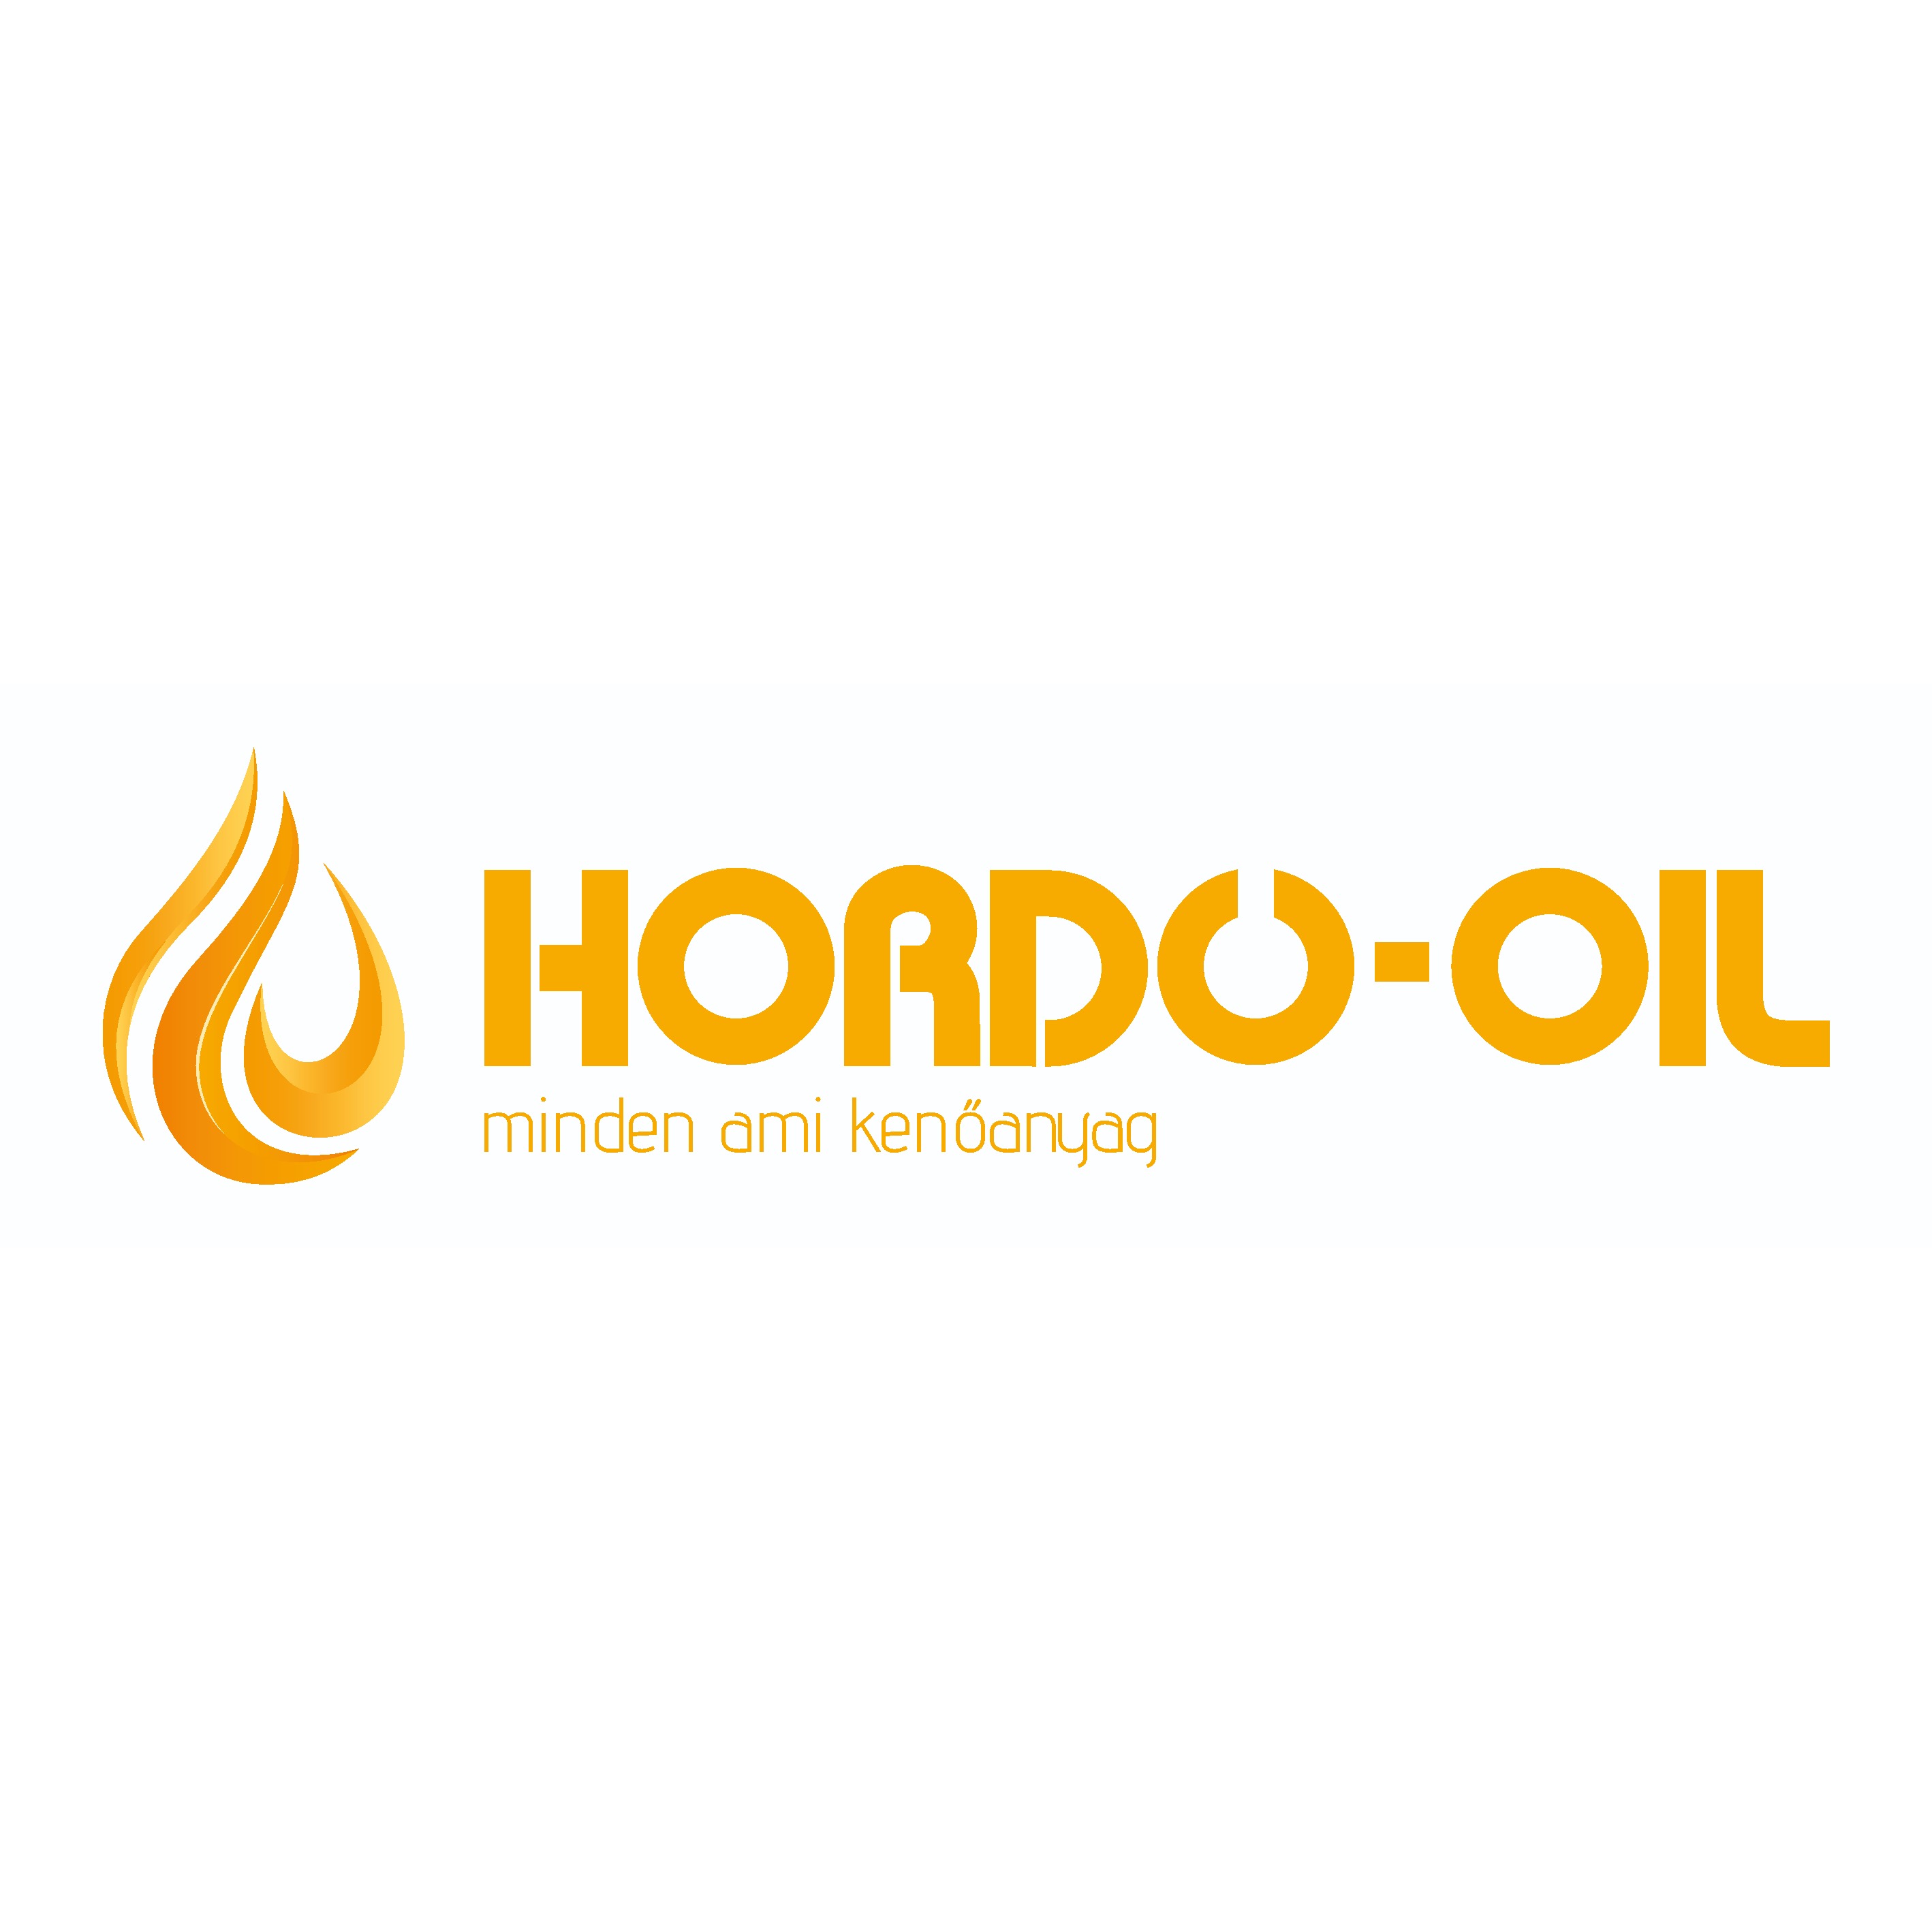 Hordó-Oil Kft. - Industrial Equipment Supplier - Mosonmagyaróvár - (06 96) 218 333 Hungary | ShowMeLocal.com